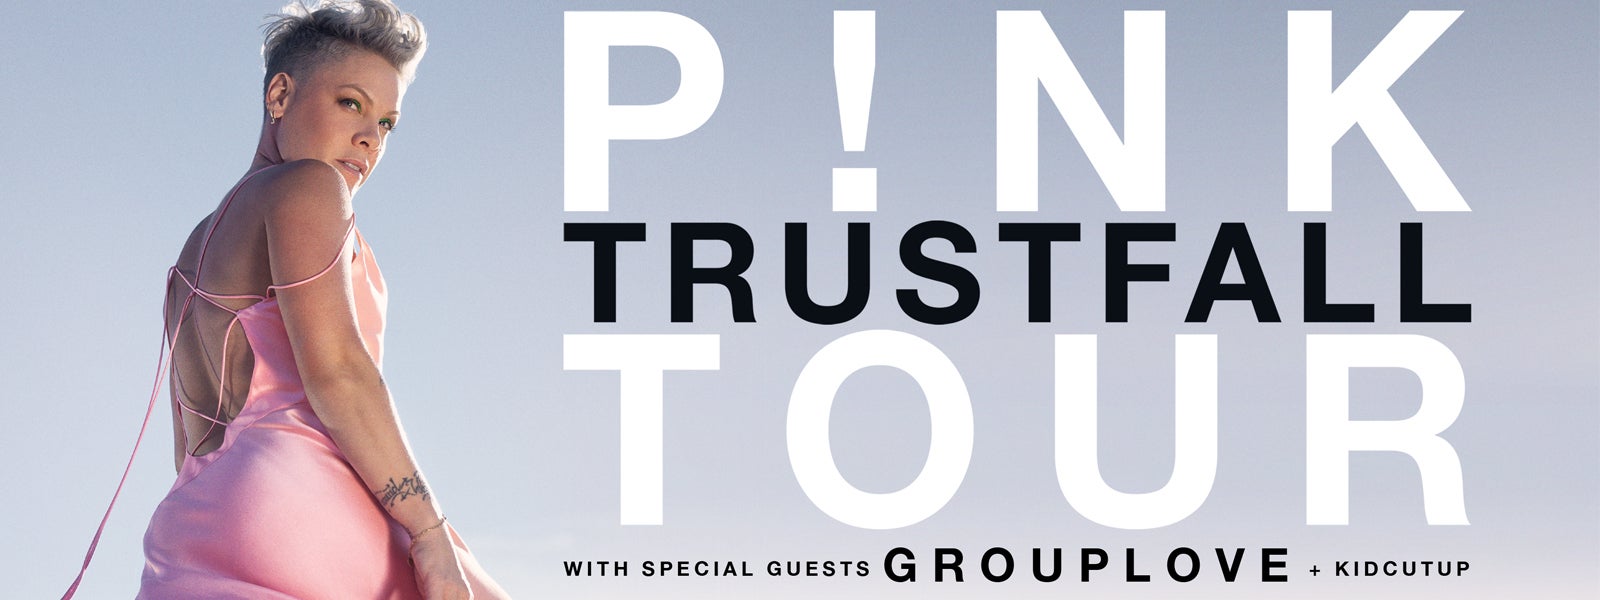 P!NK:TRUSTFALL TOUR 